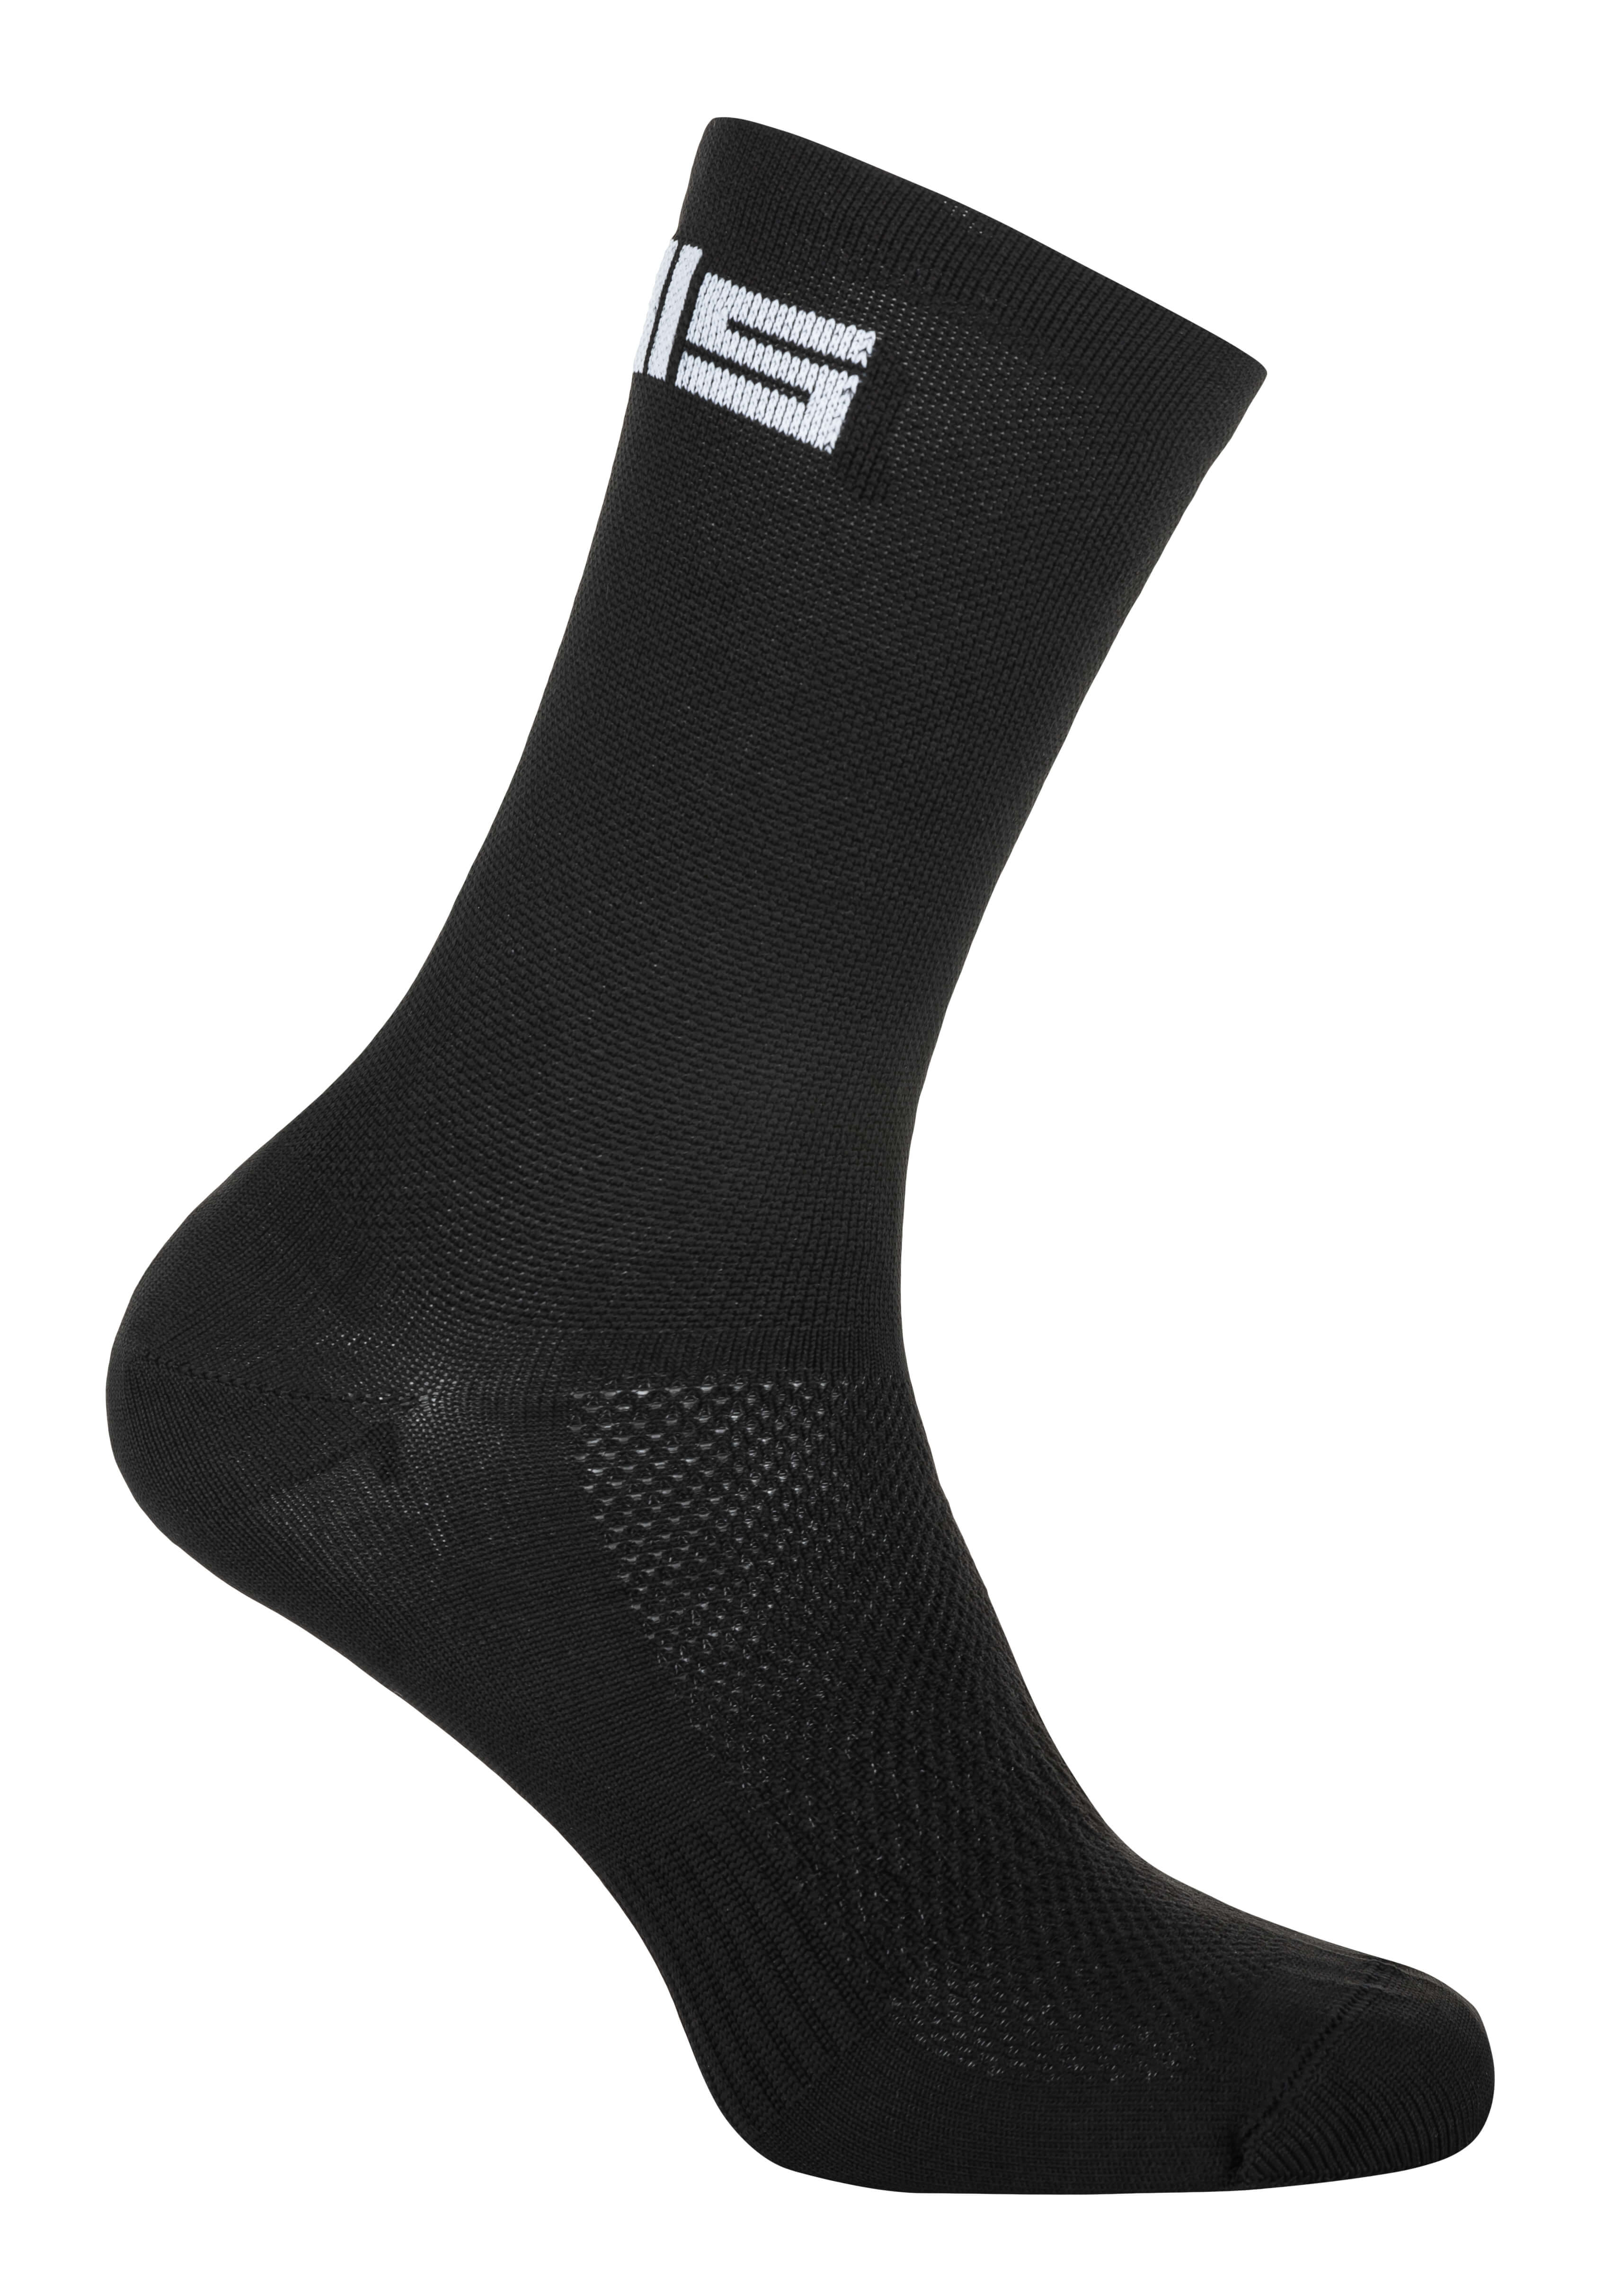 Ponožky PELLS Logos Black/White - 35-38